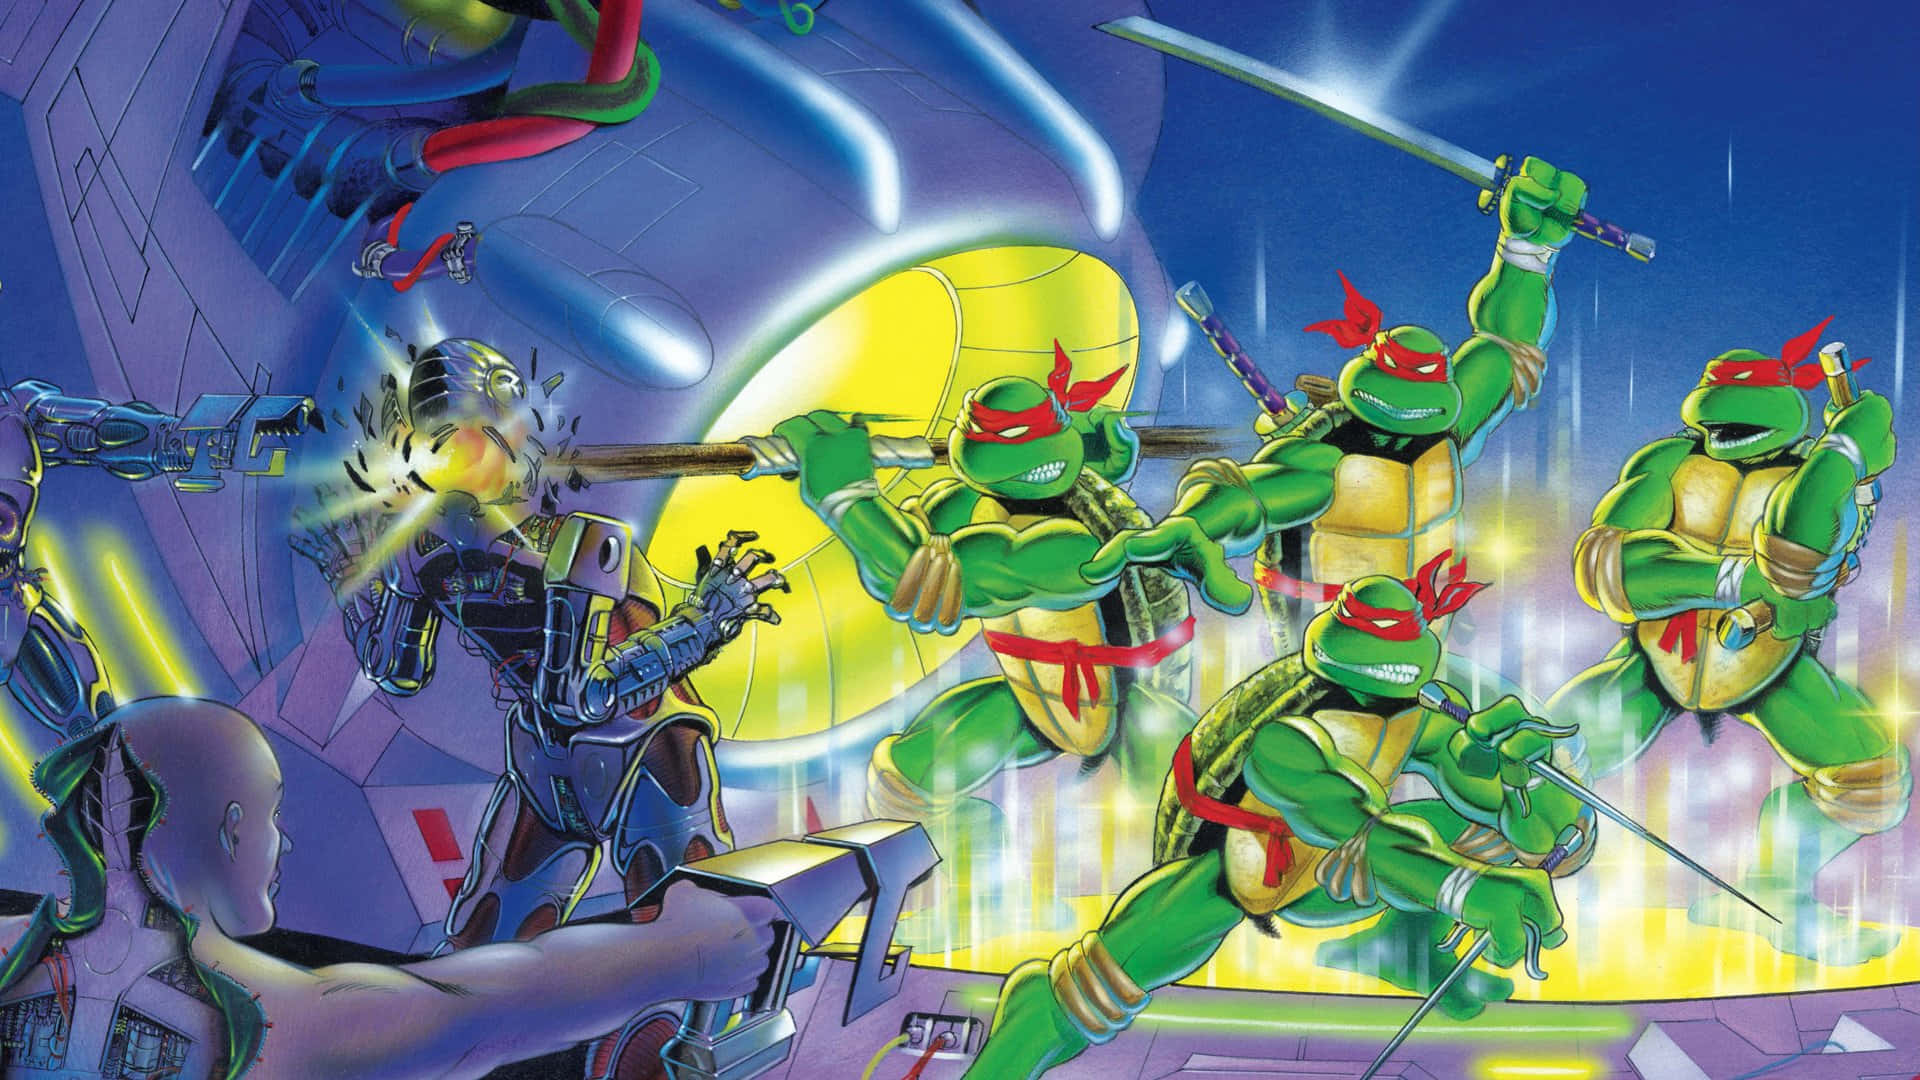 The Ninja Turtles - Ready to Take on Shredder